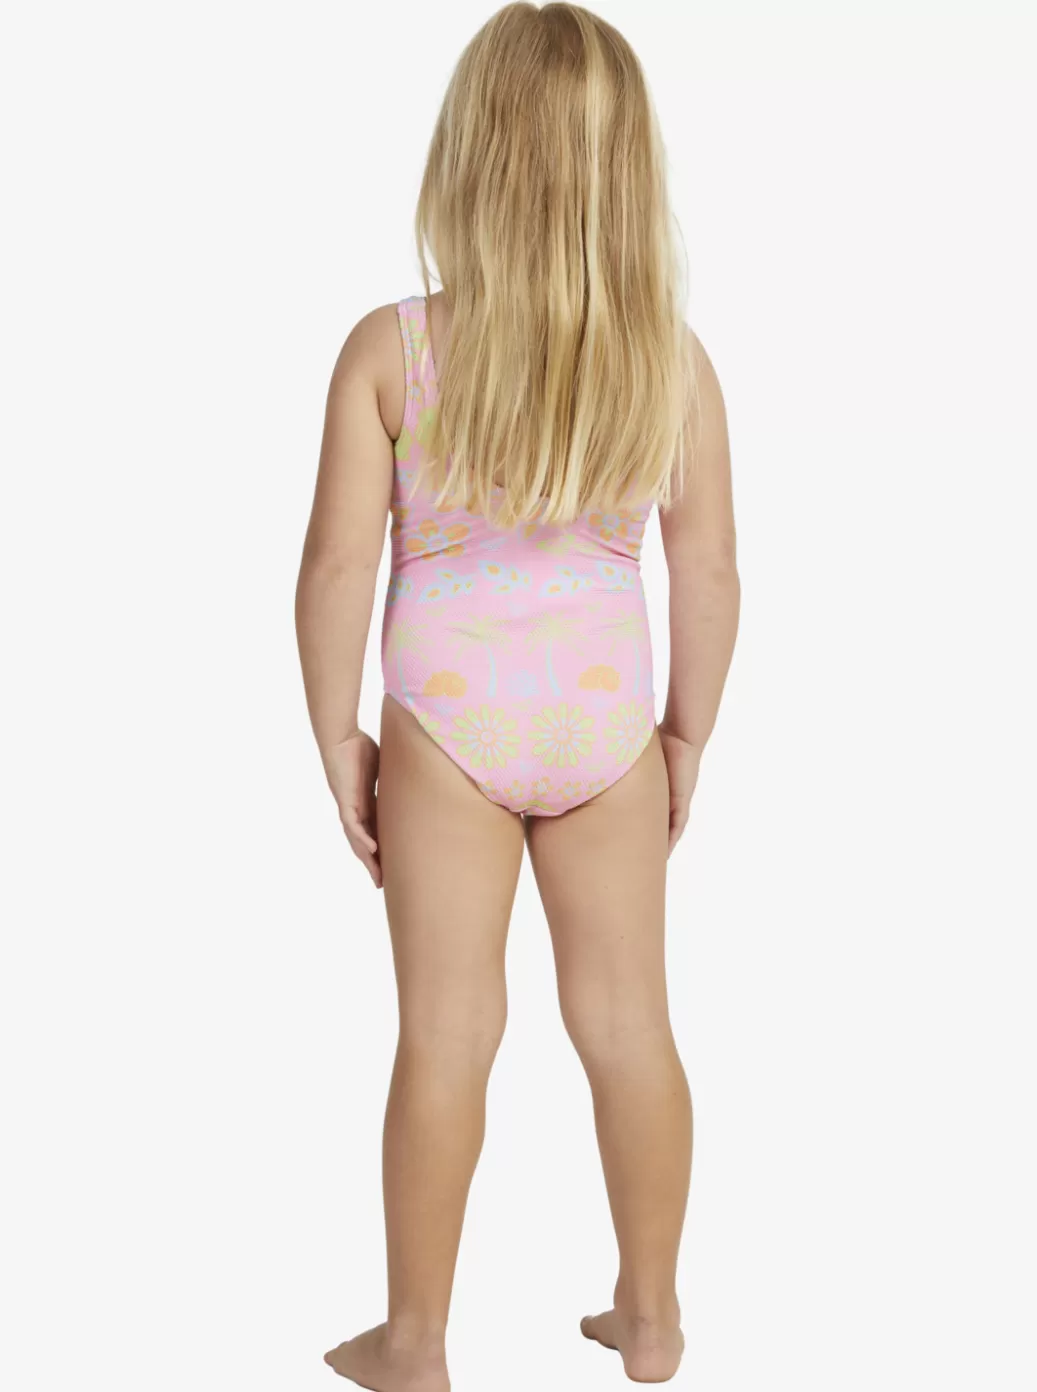 Swim | KIDS ROXY Girl's 2-7 Beach Day Together One-Piece Swimsuit Sachet Pink Beachy Bebe